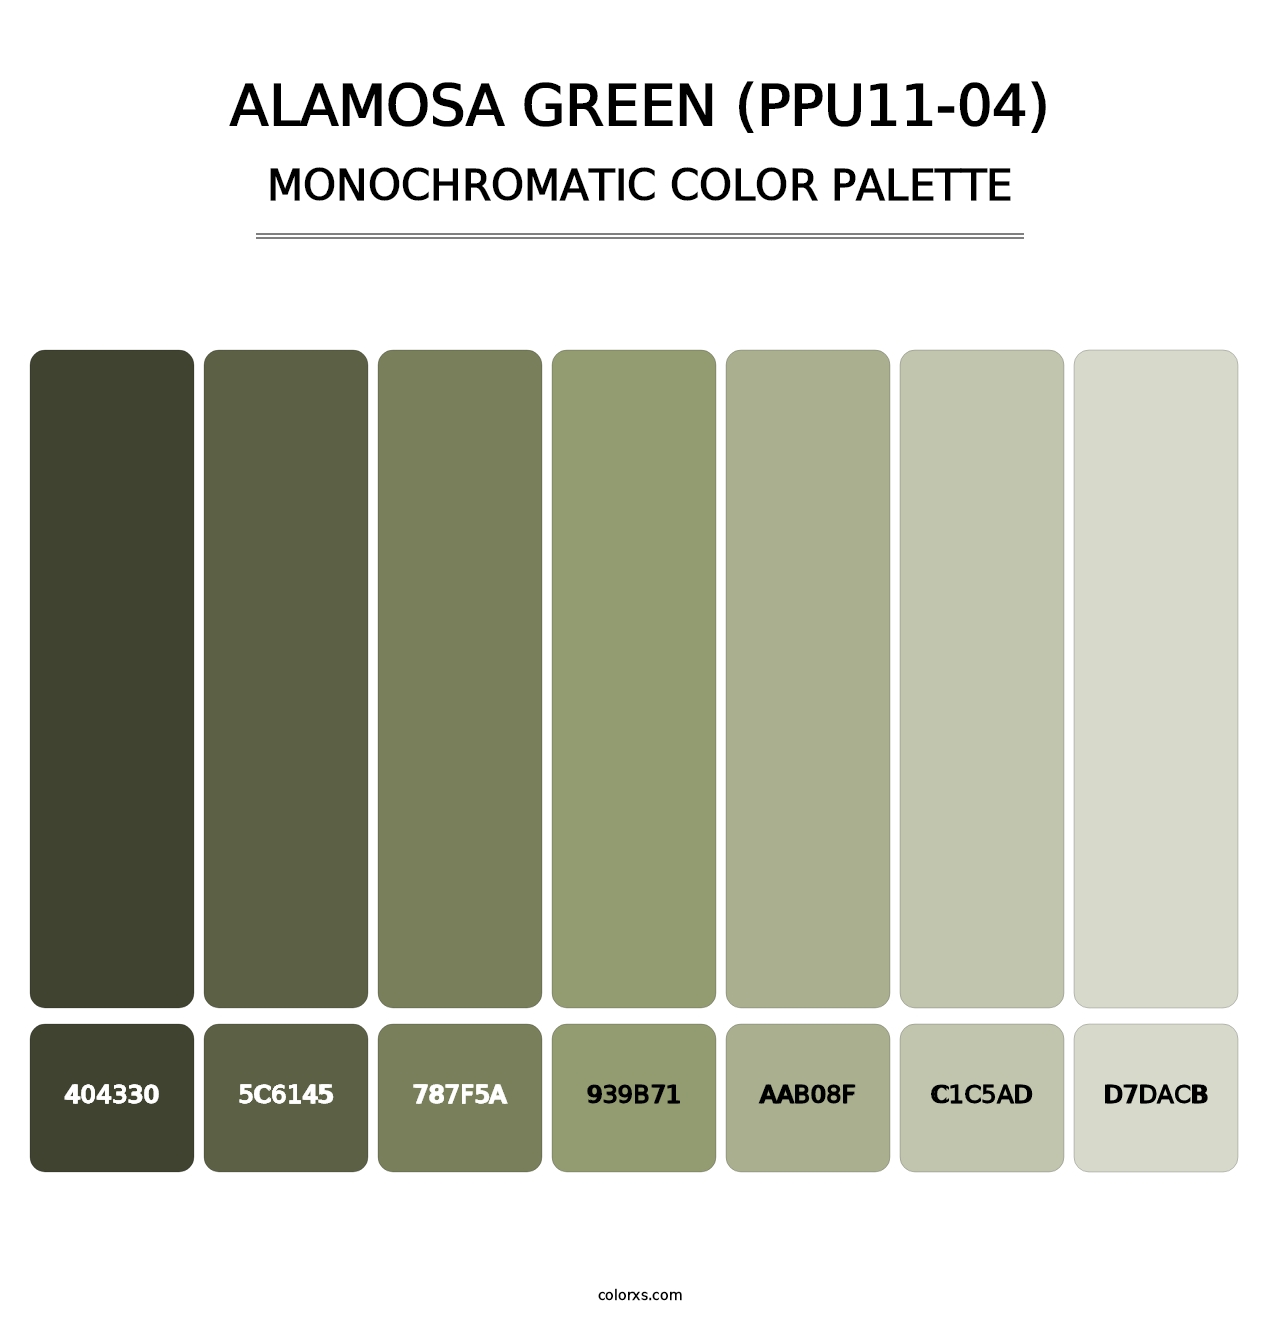 Alamosa Green (PPU11-04) - Monochromatic Color Palette